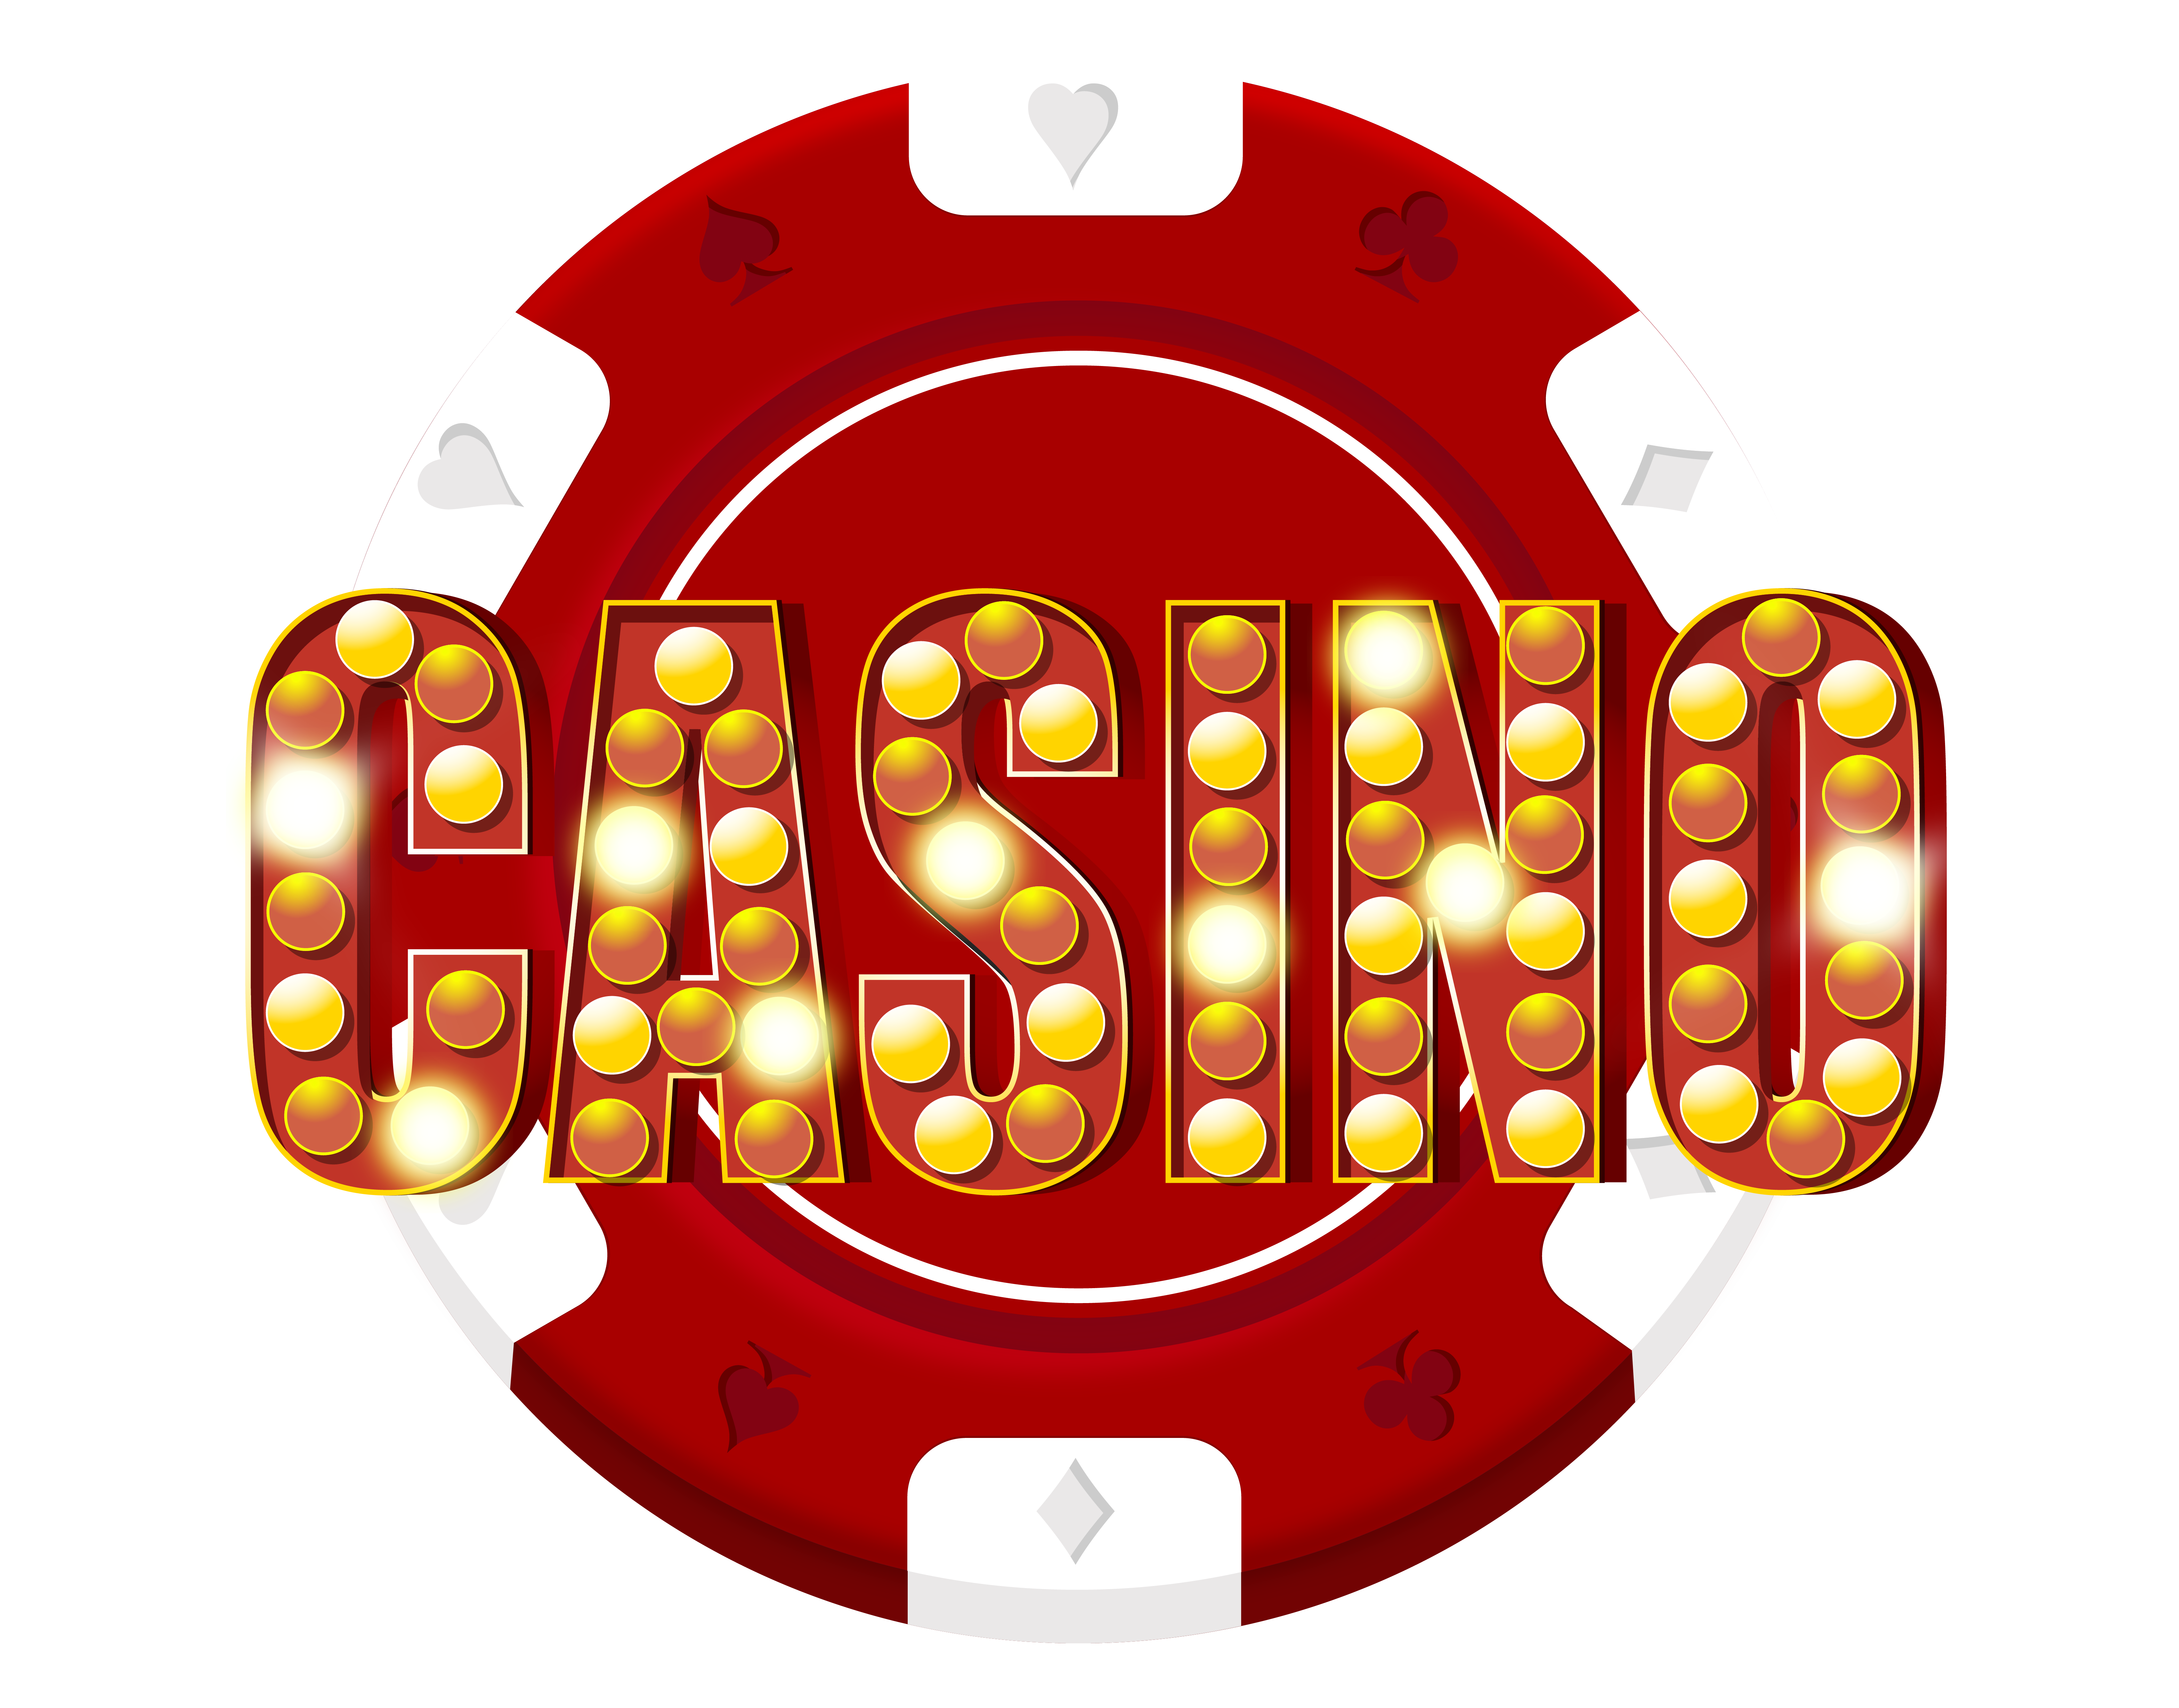 casino png